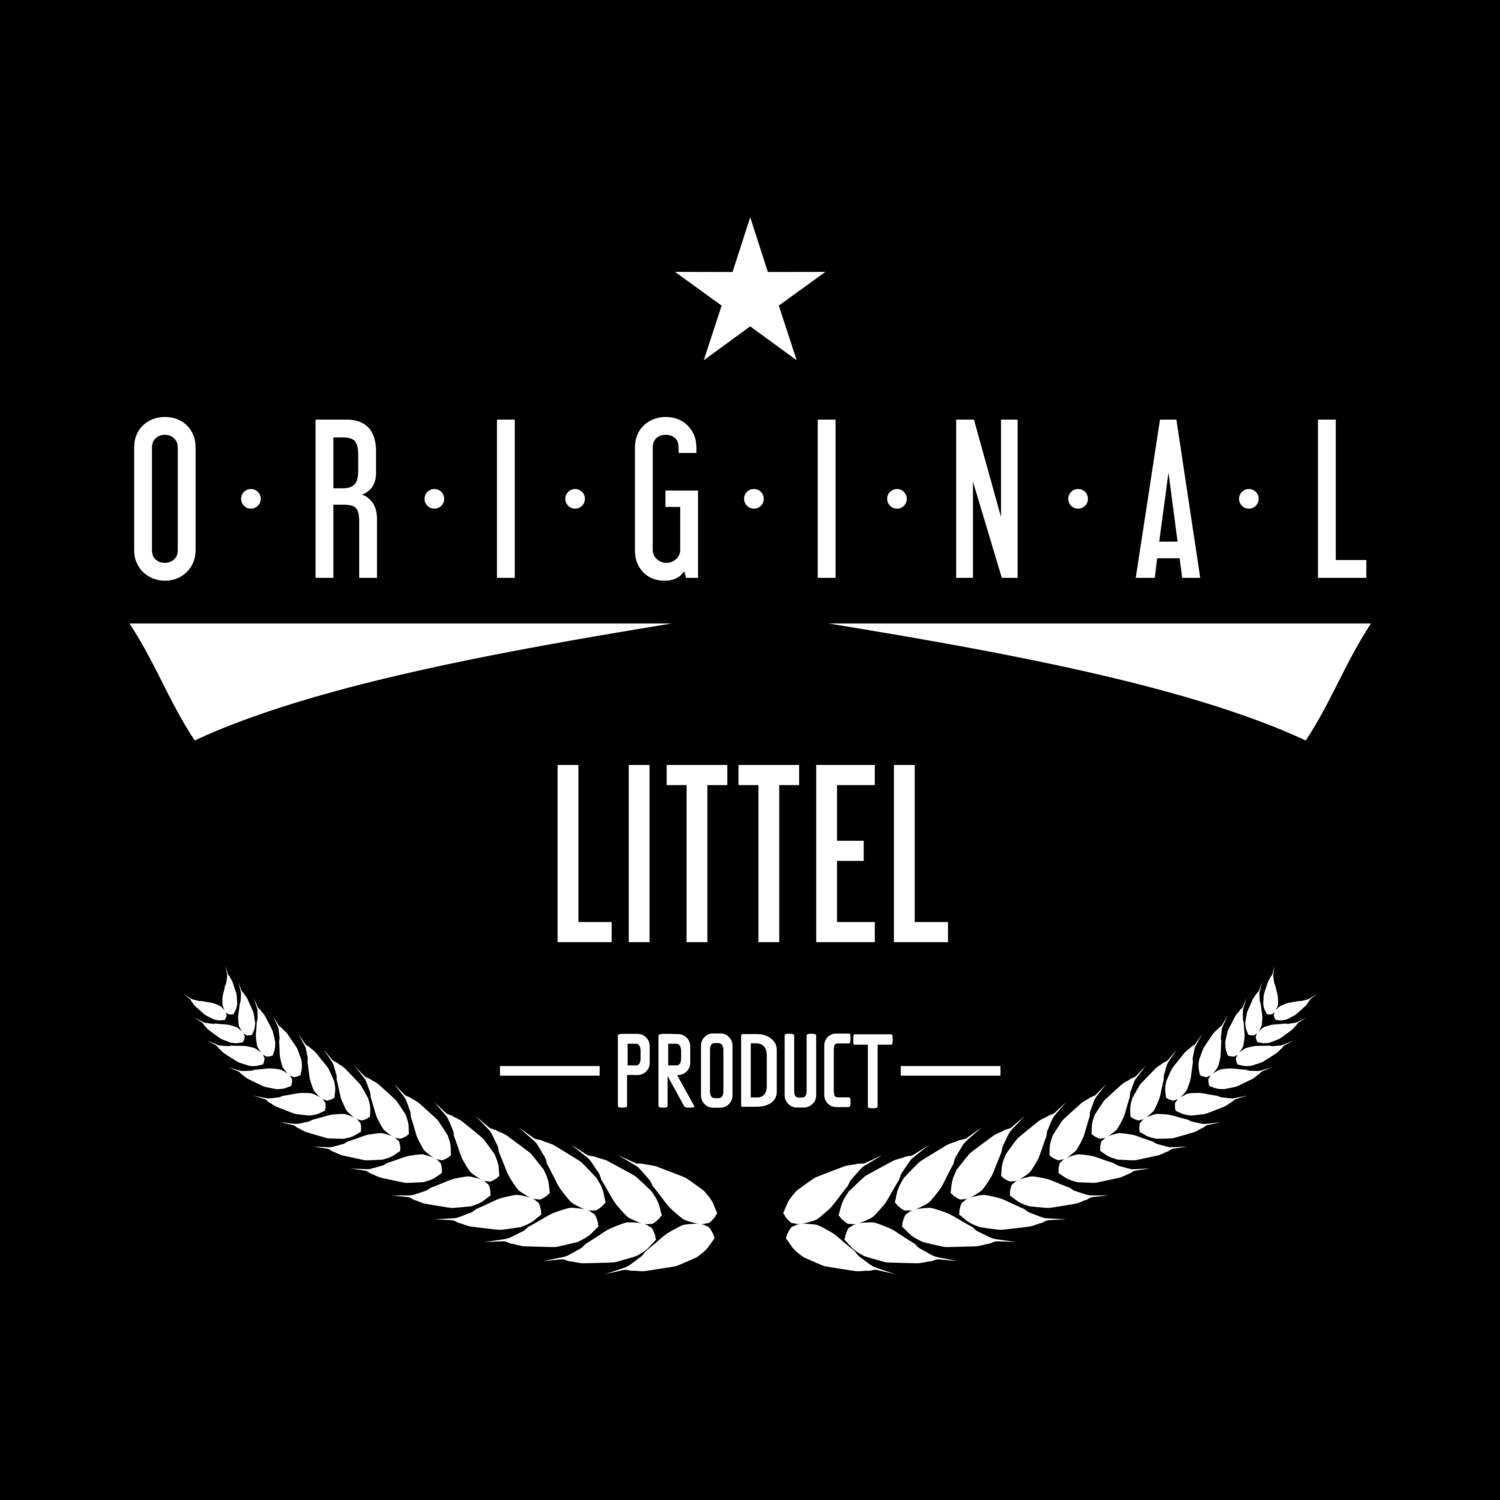 Littel T-Shirt »Original Product«